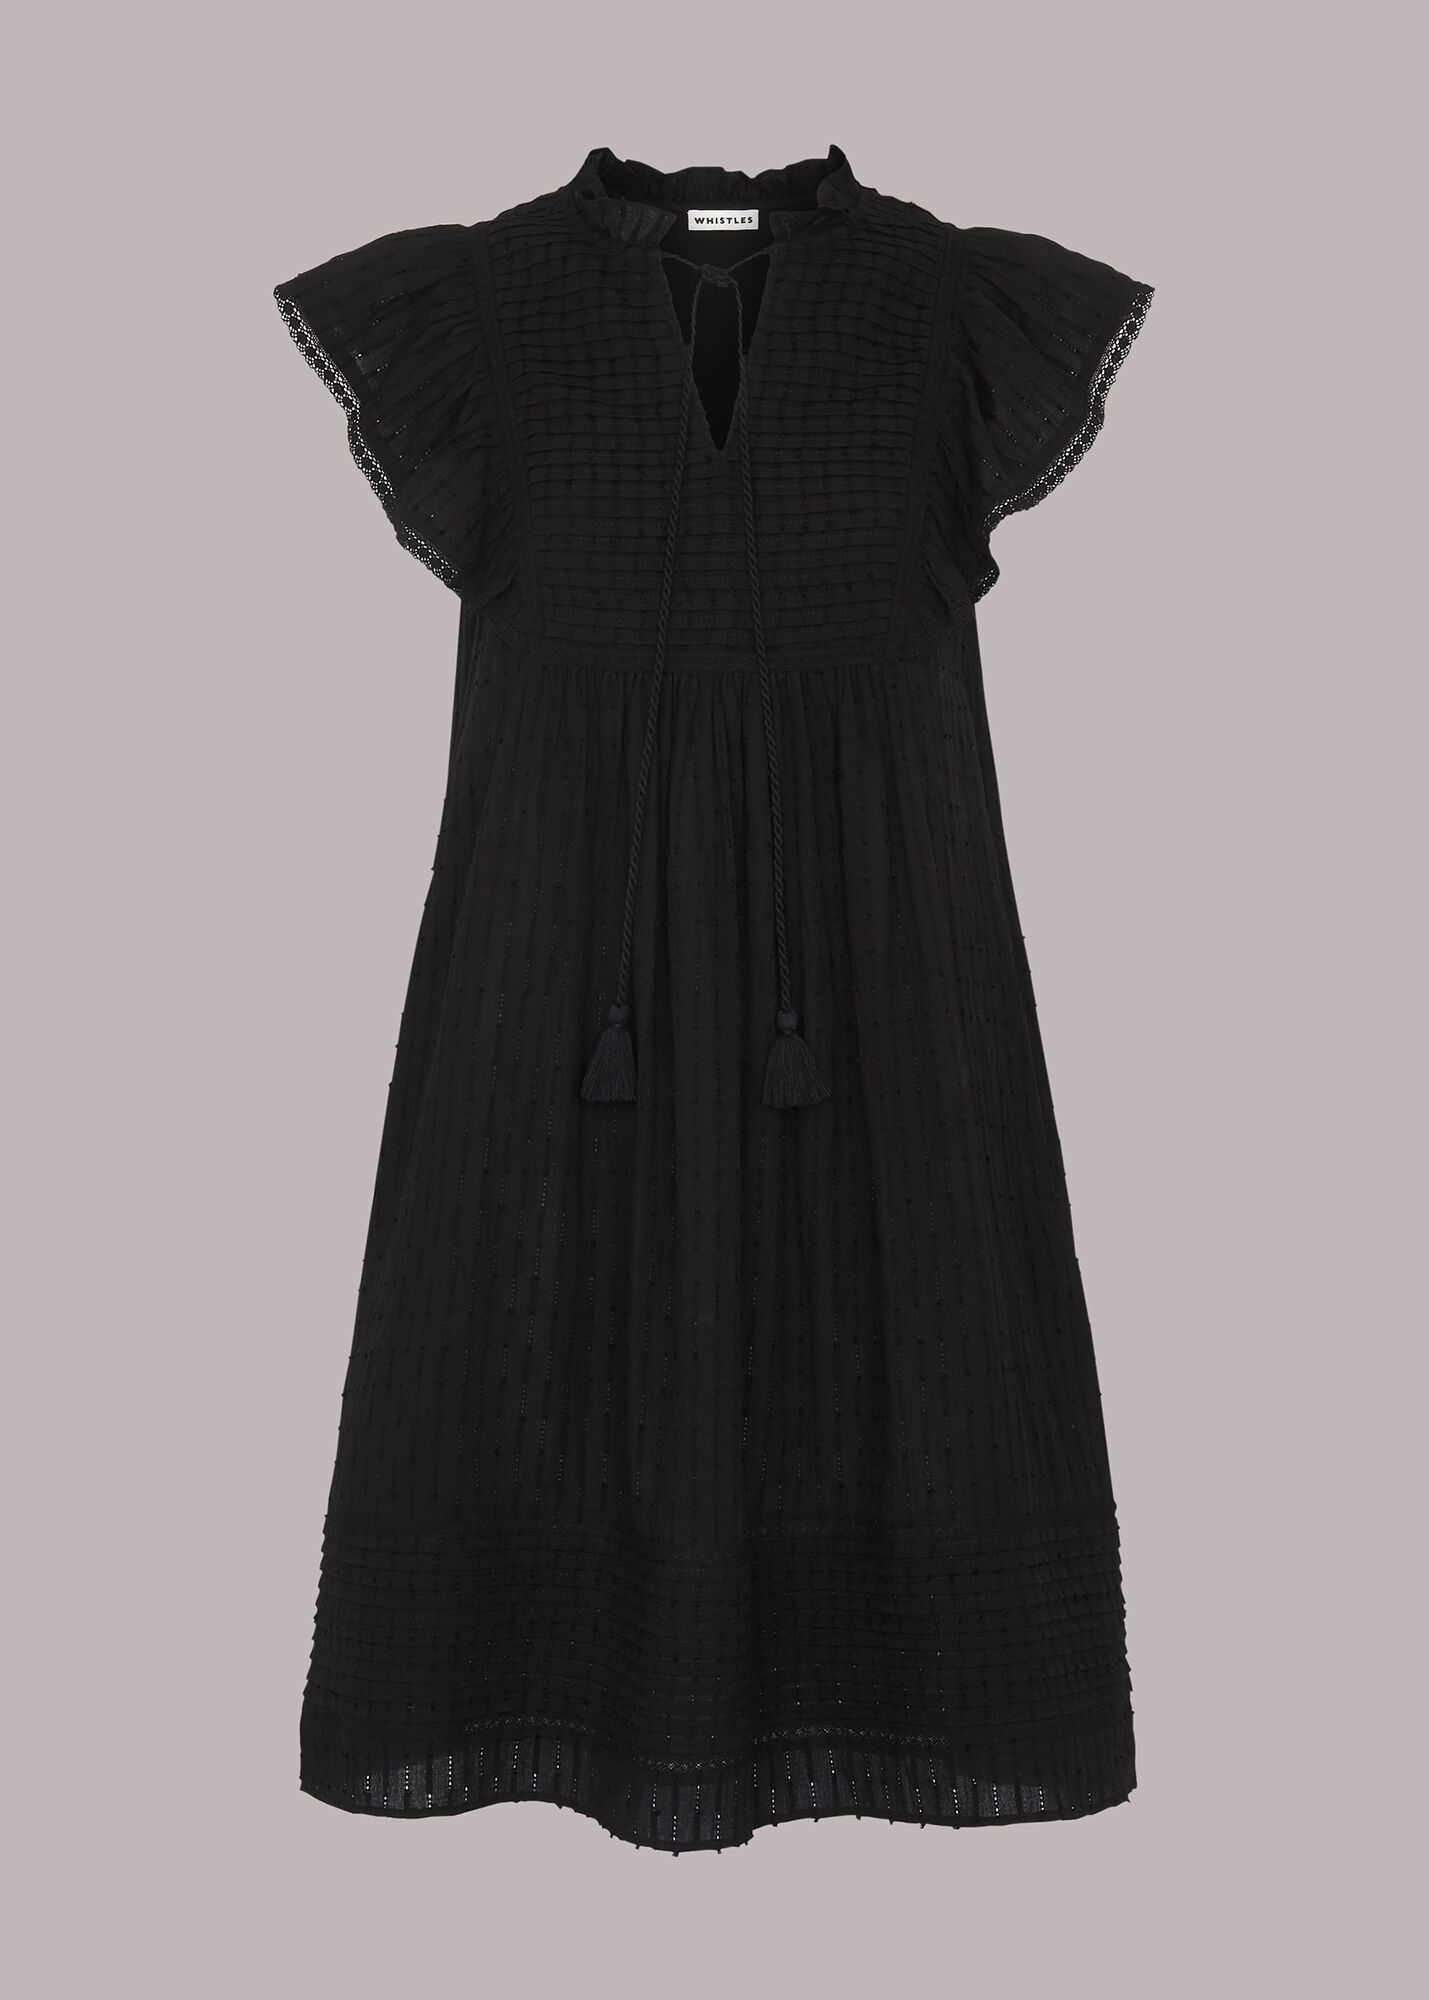 Black Pintuck Frill Cotton Dress | WHISTLES | Whistles UK